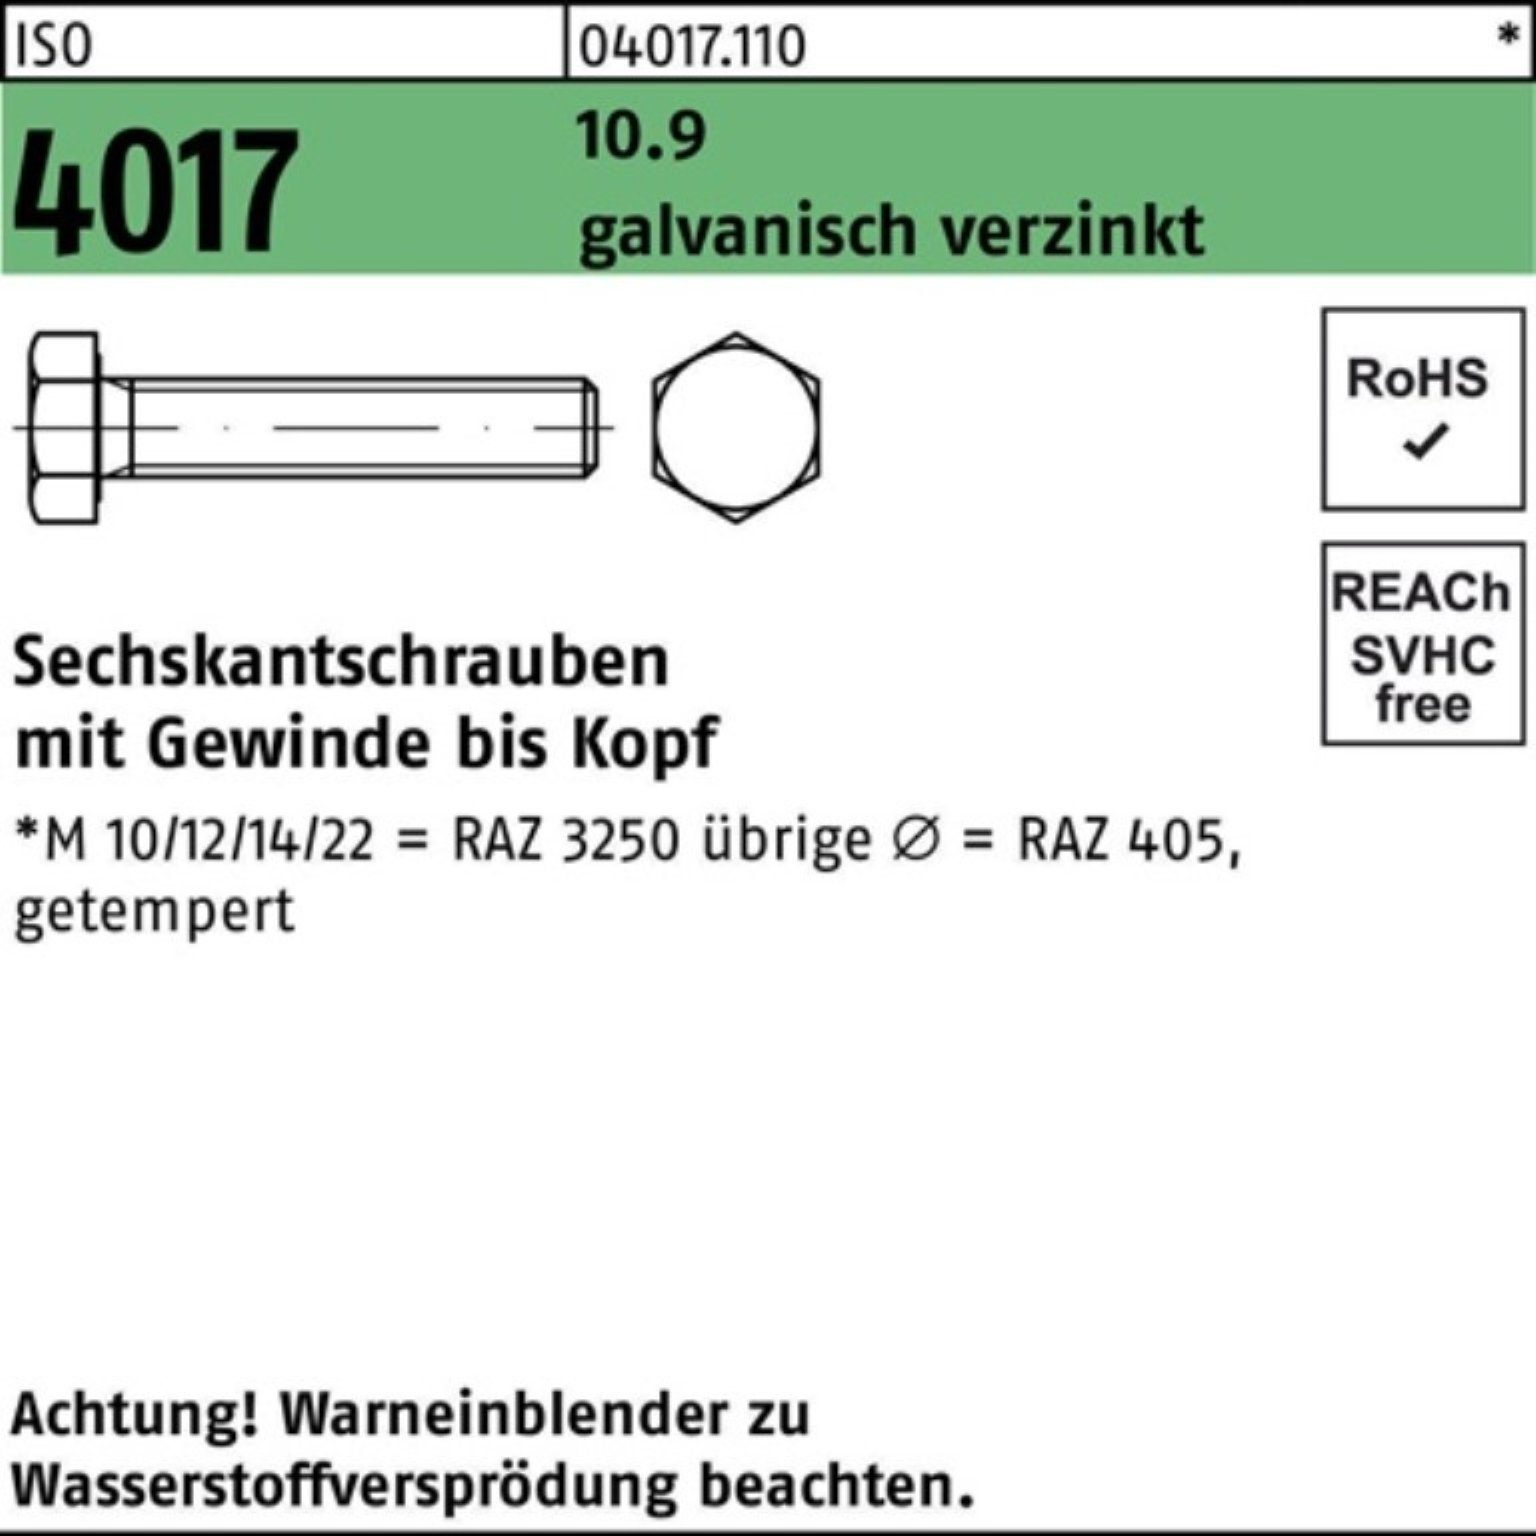 Bufab Sechskantschraube 100er Pack Sechskantschraube S 10.9 4017 VG ISO galv.verz. 100 M27x 10